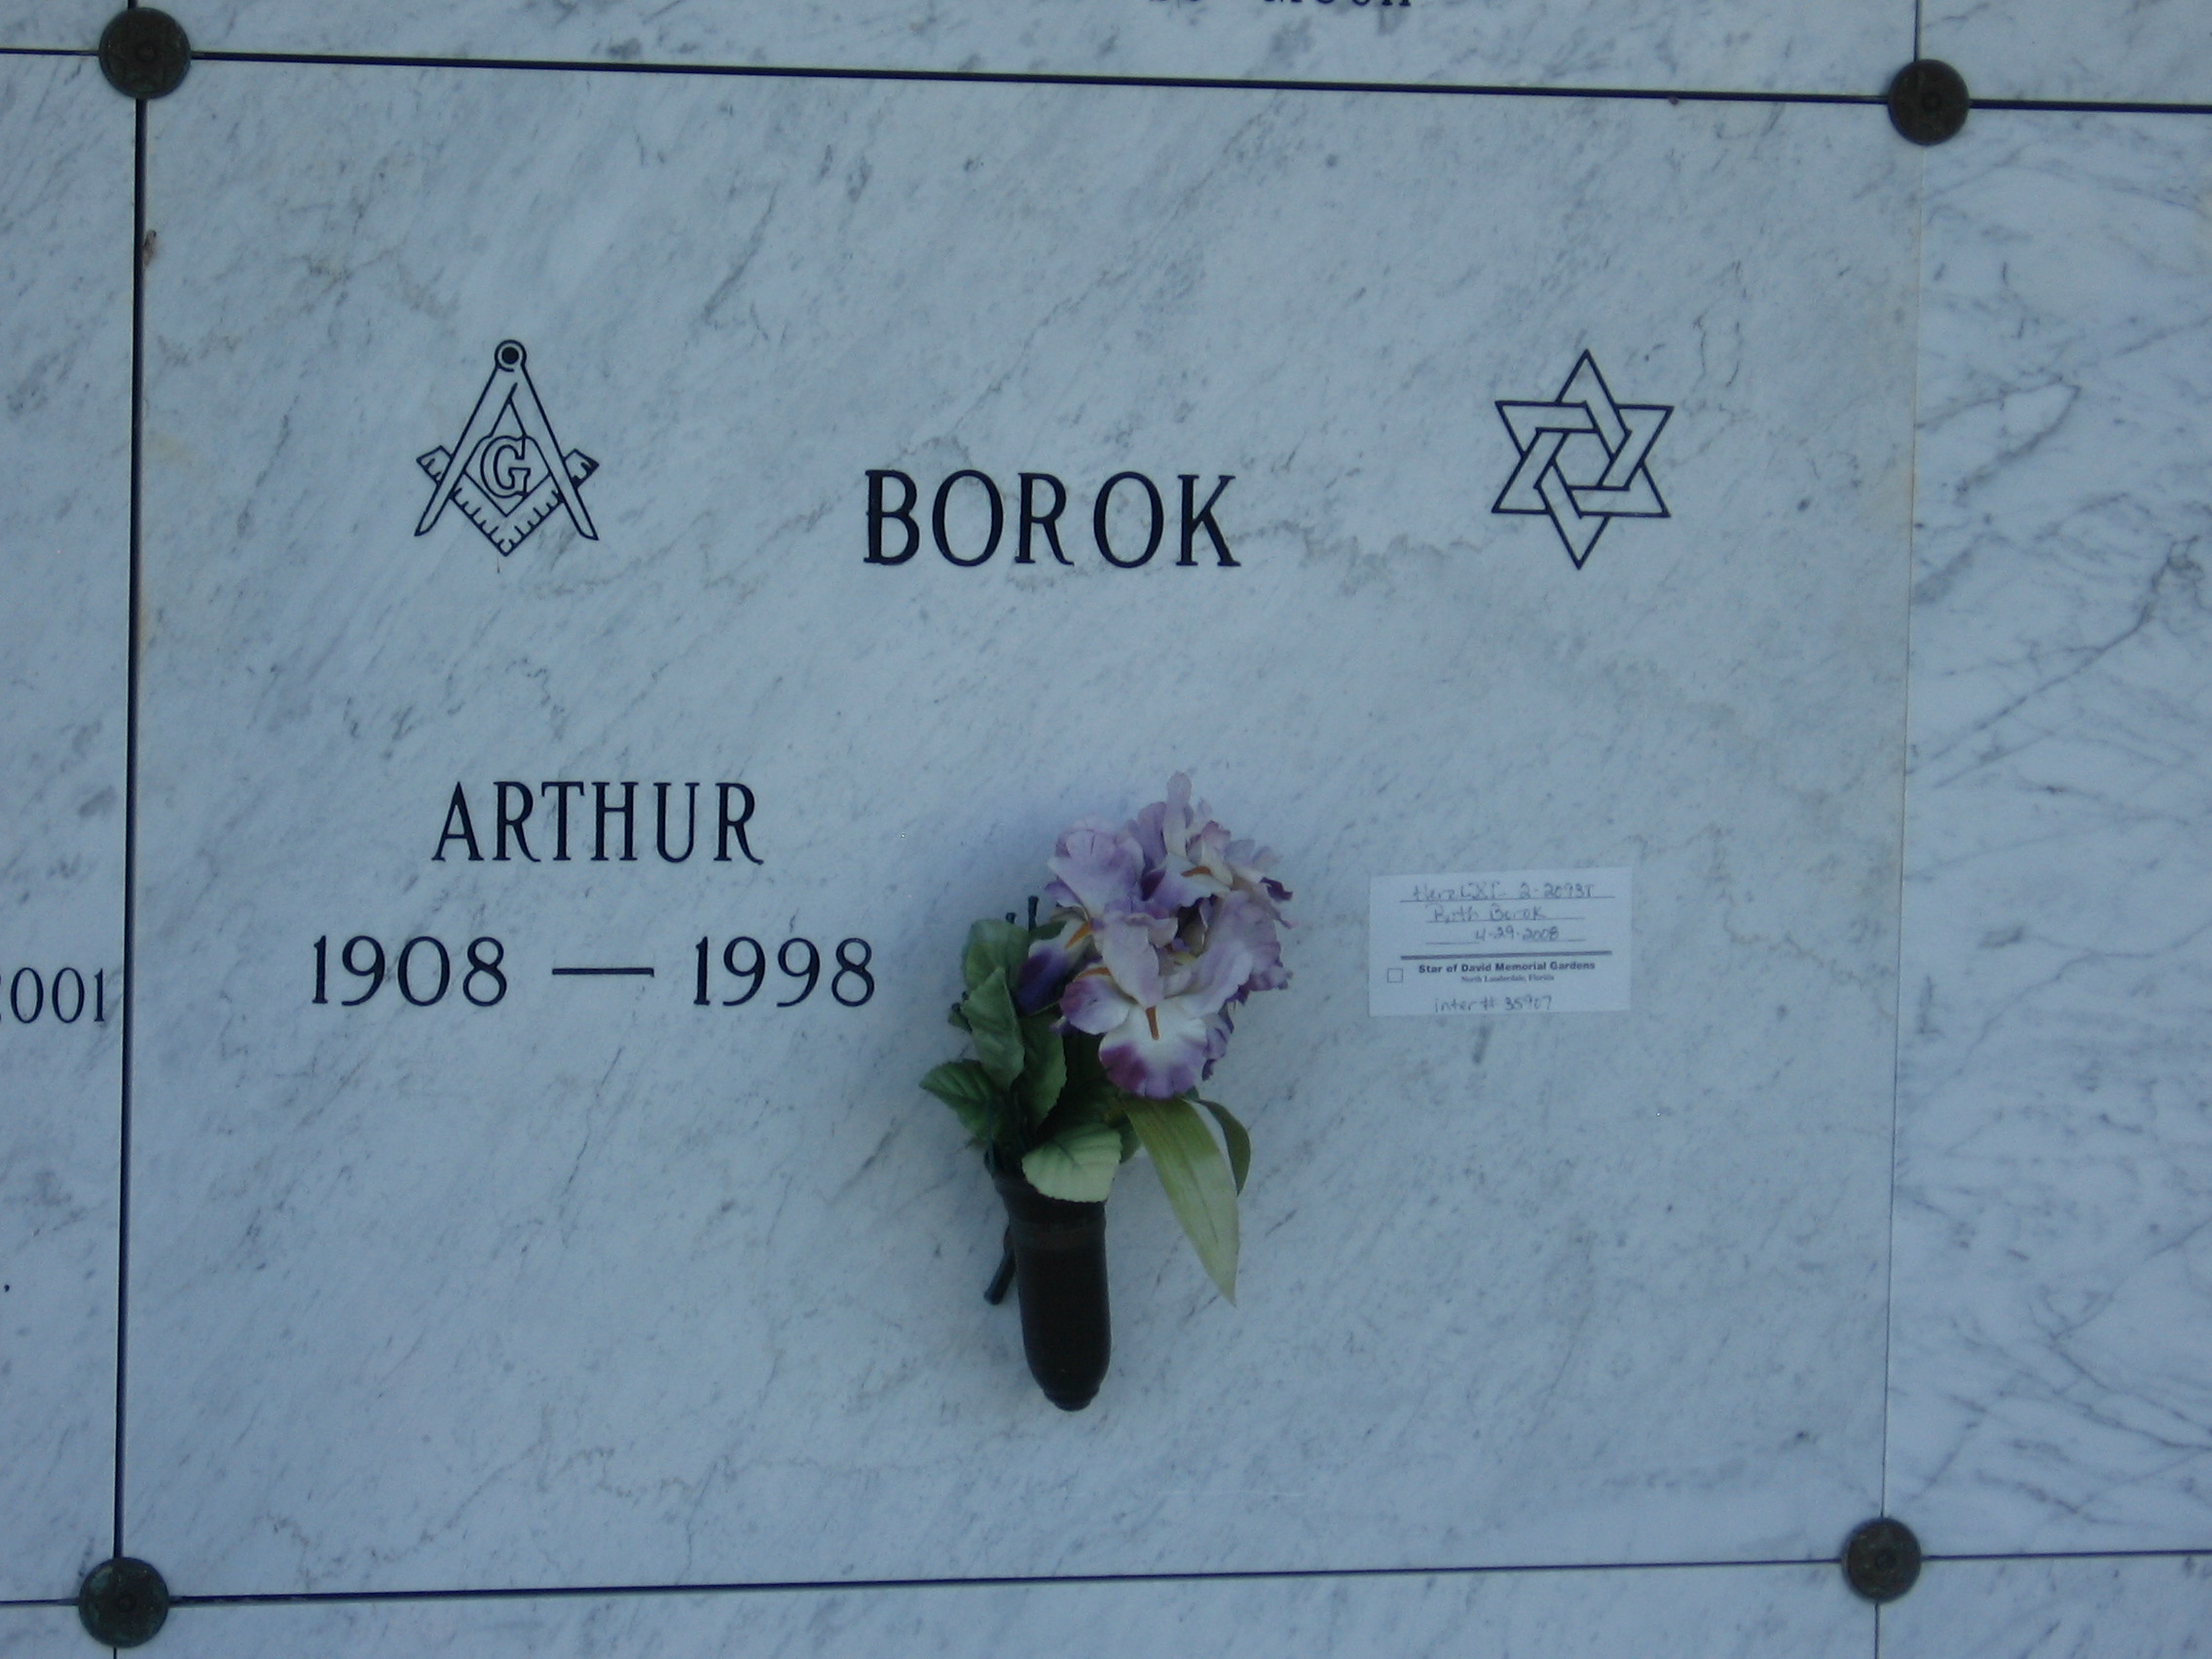 Arthur Borok